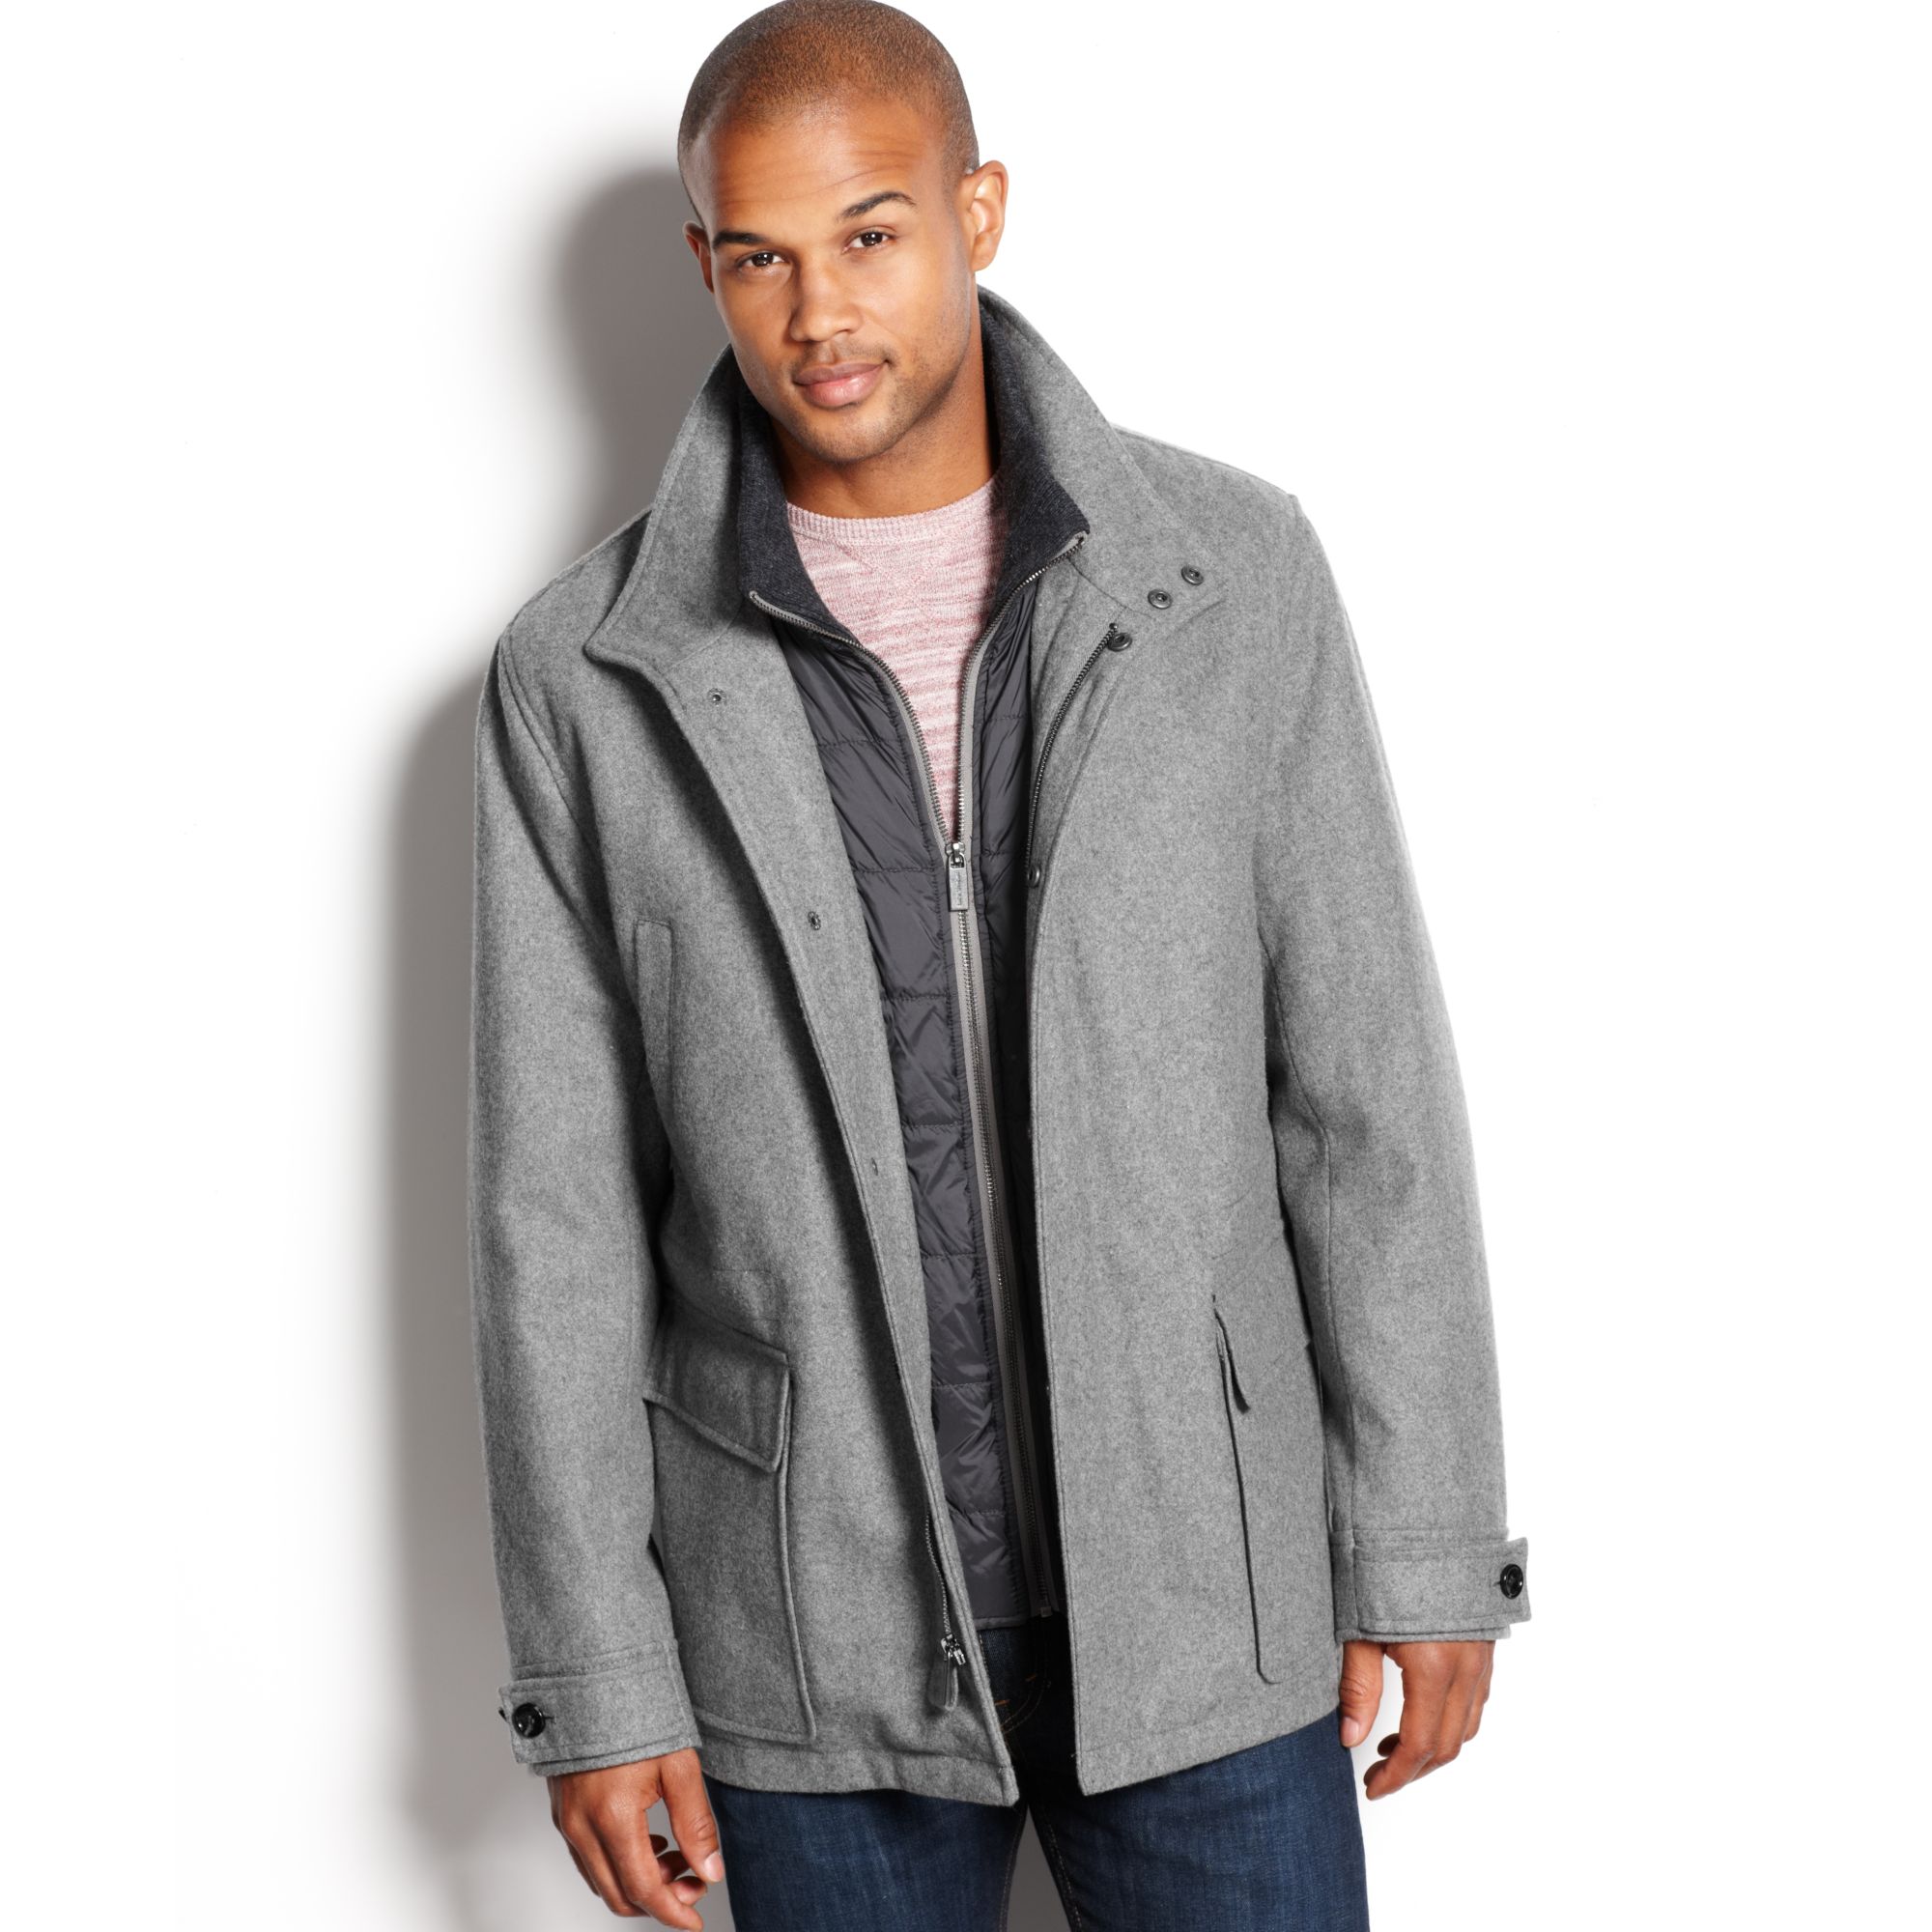 michael kors men's wool blend coat